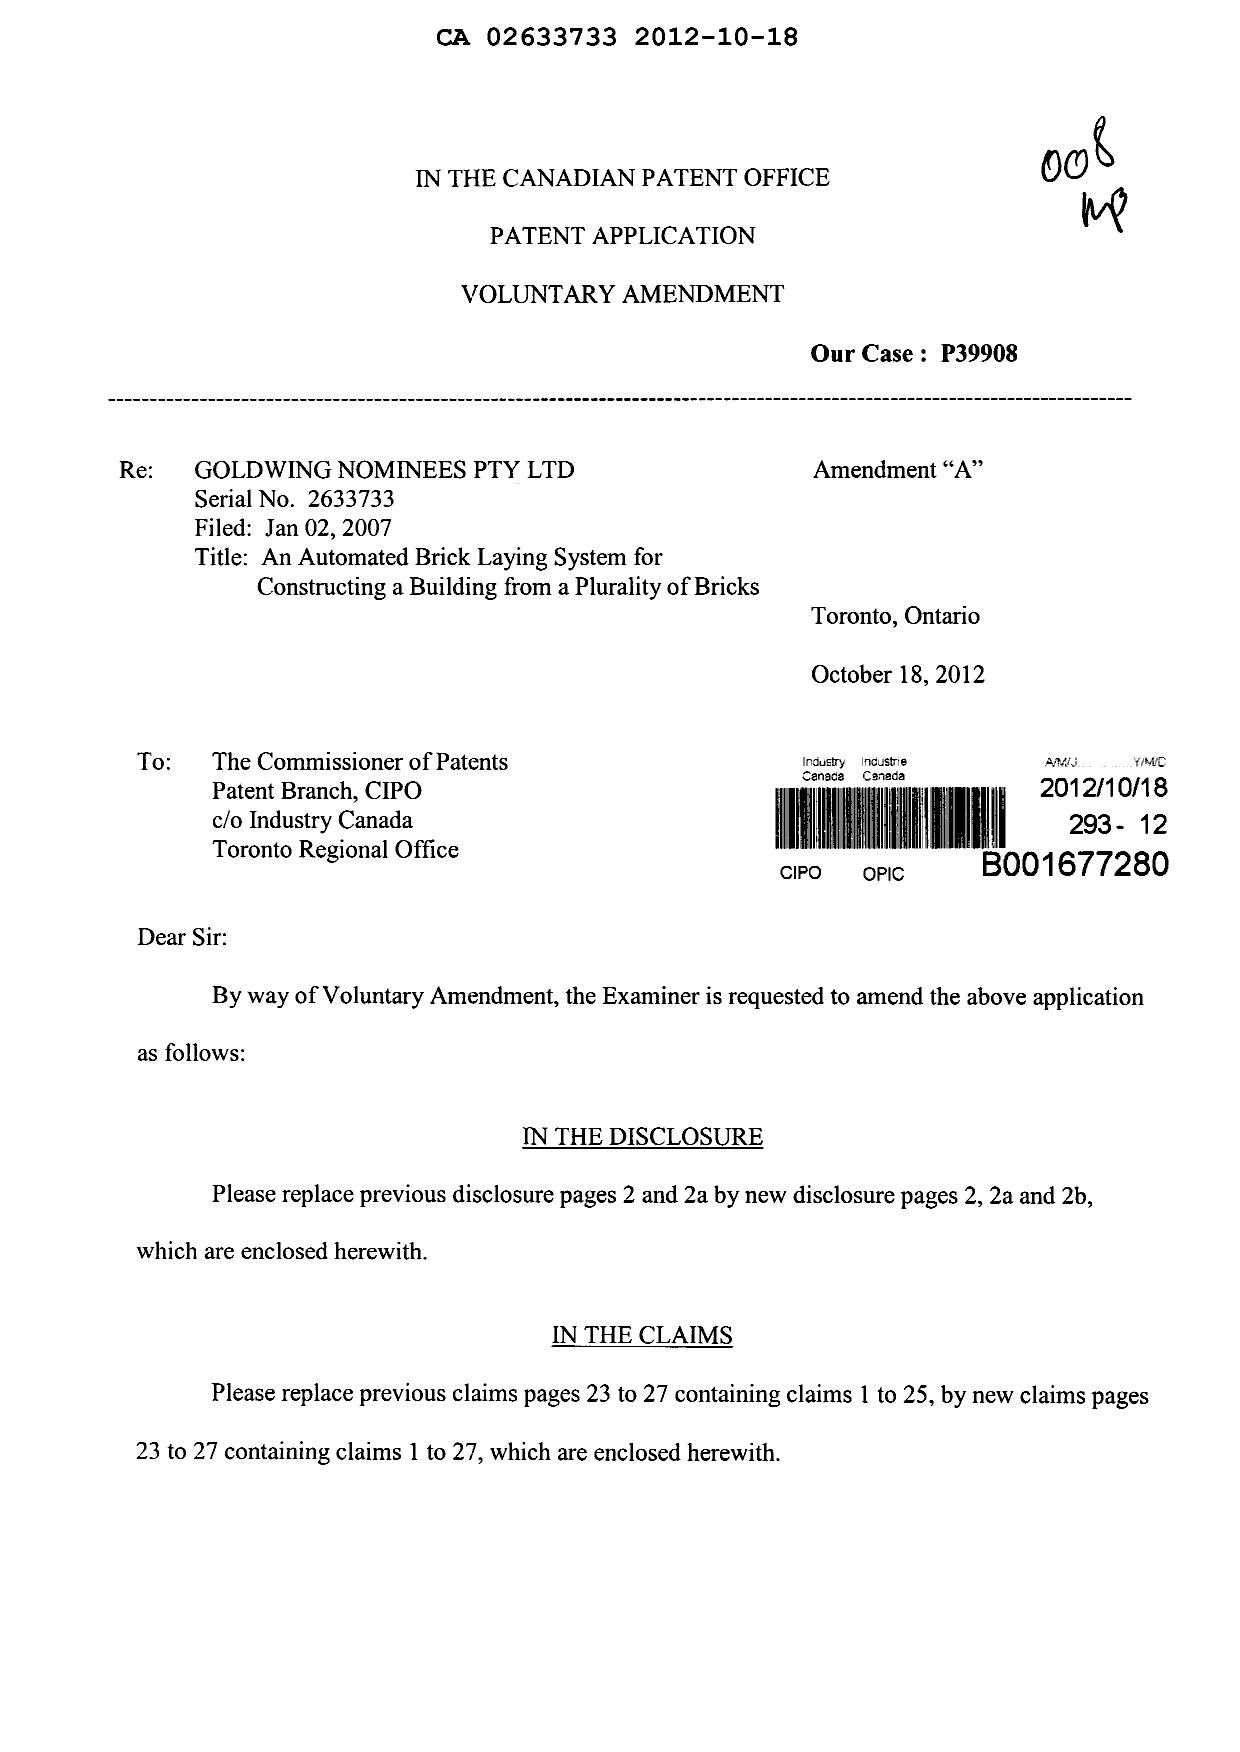 Canadian Patent Document 2633733. Prosecution-Amendment 20121018. Image 1 of 12